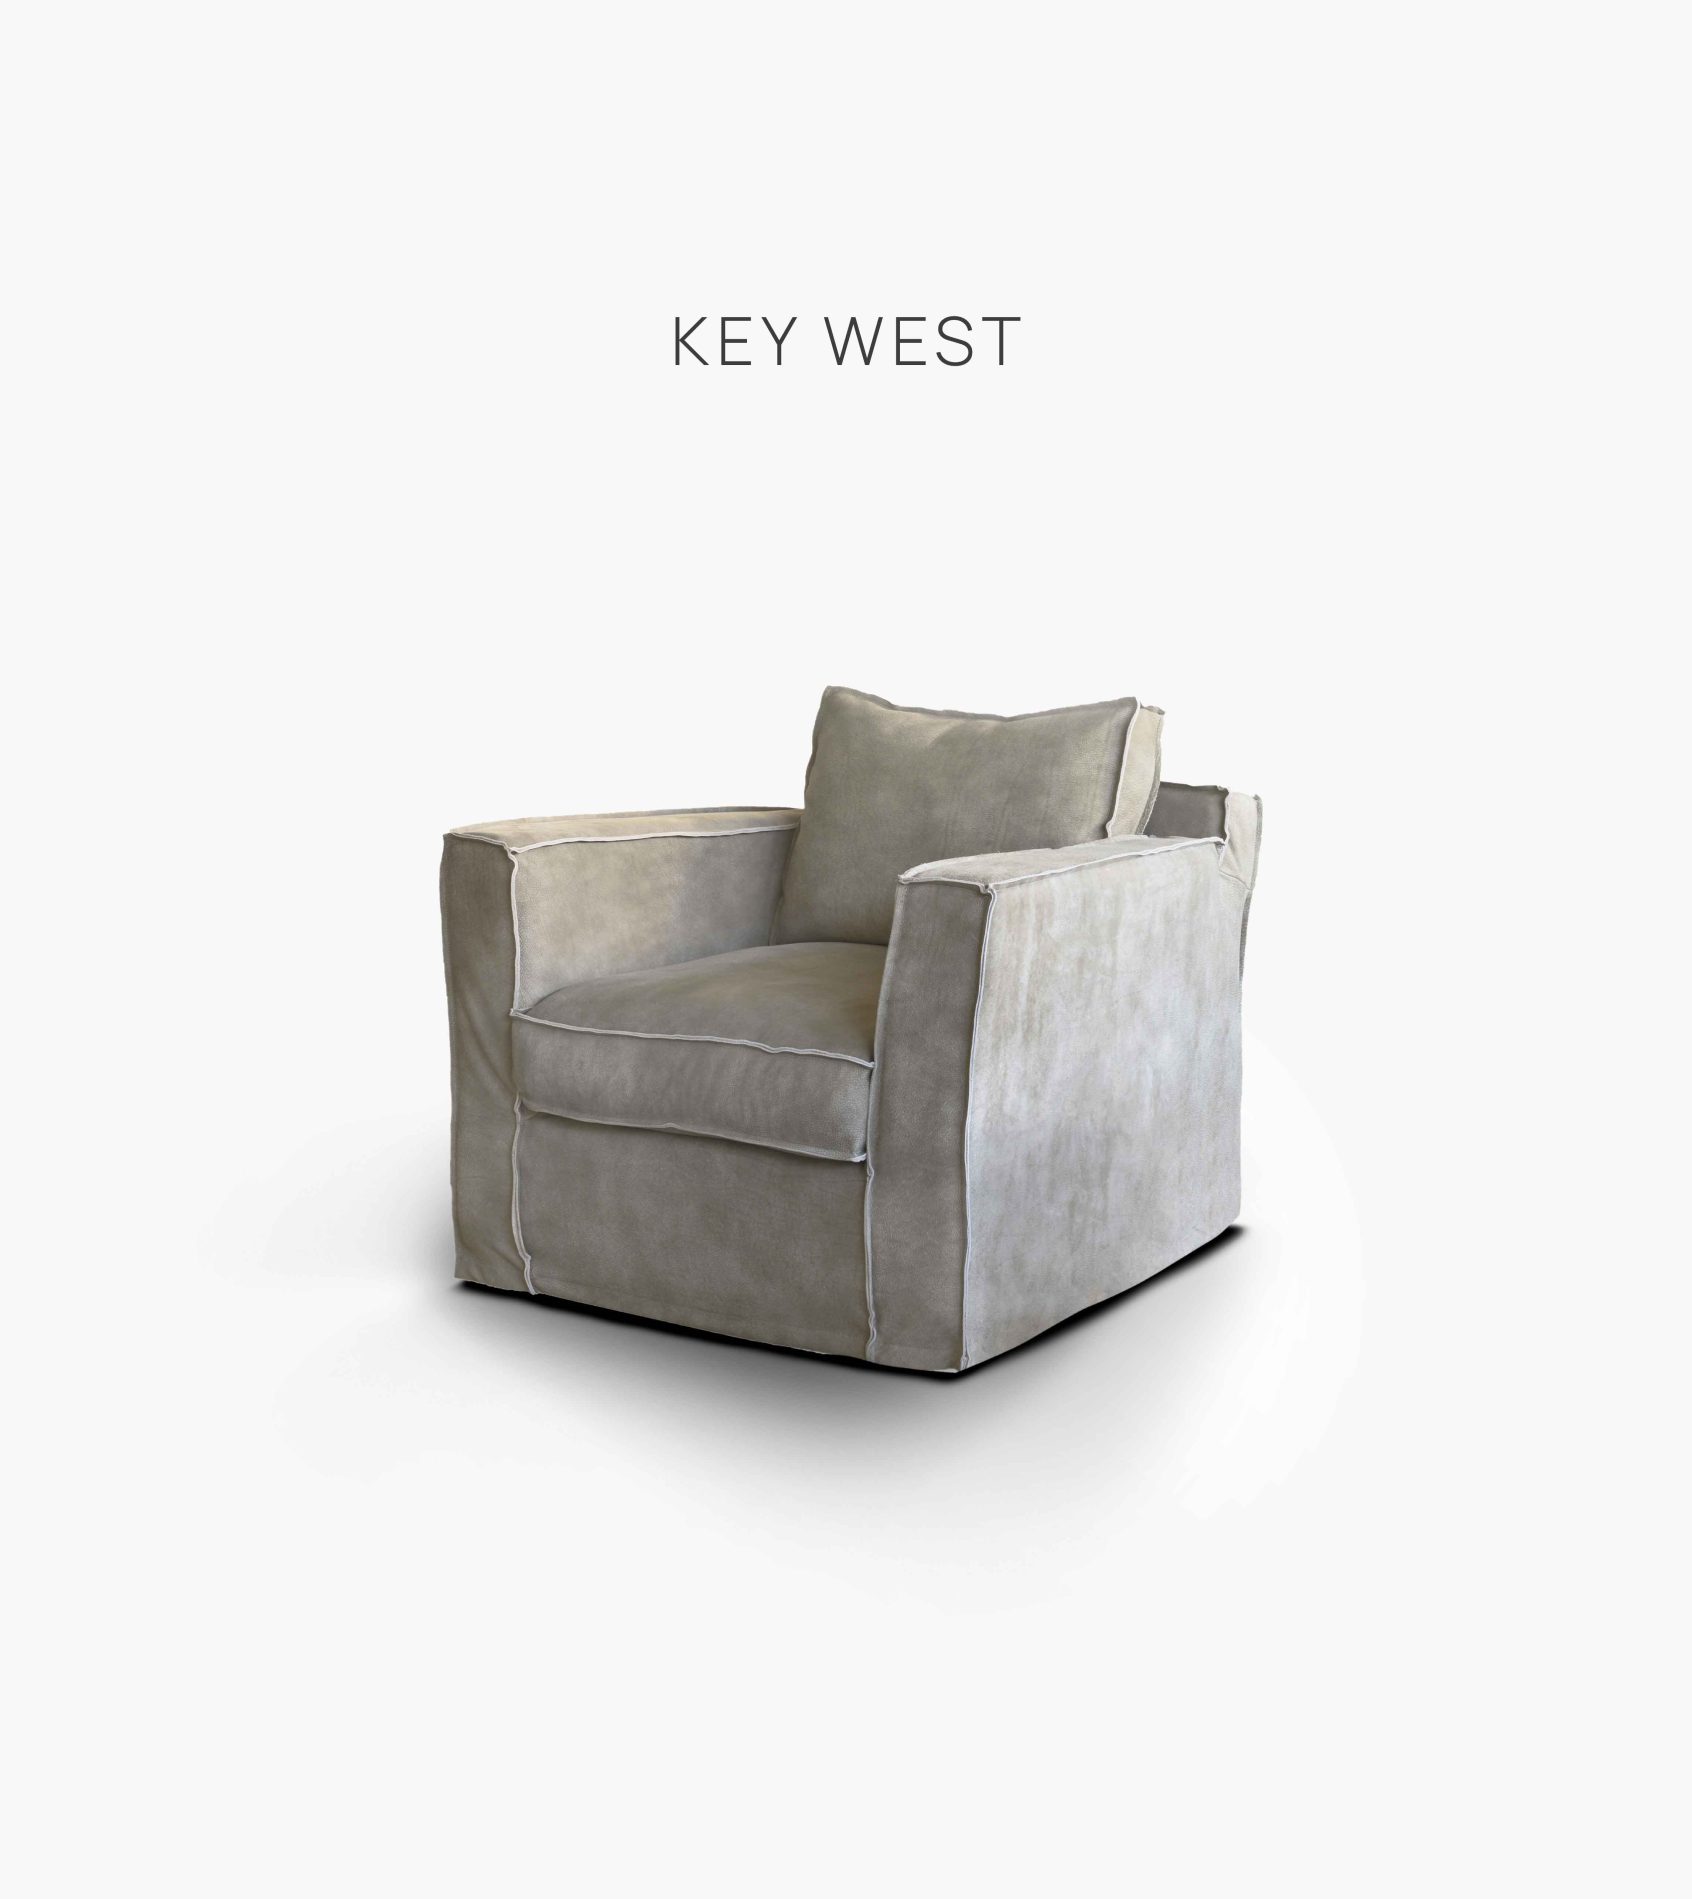 Key West armchair